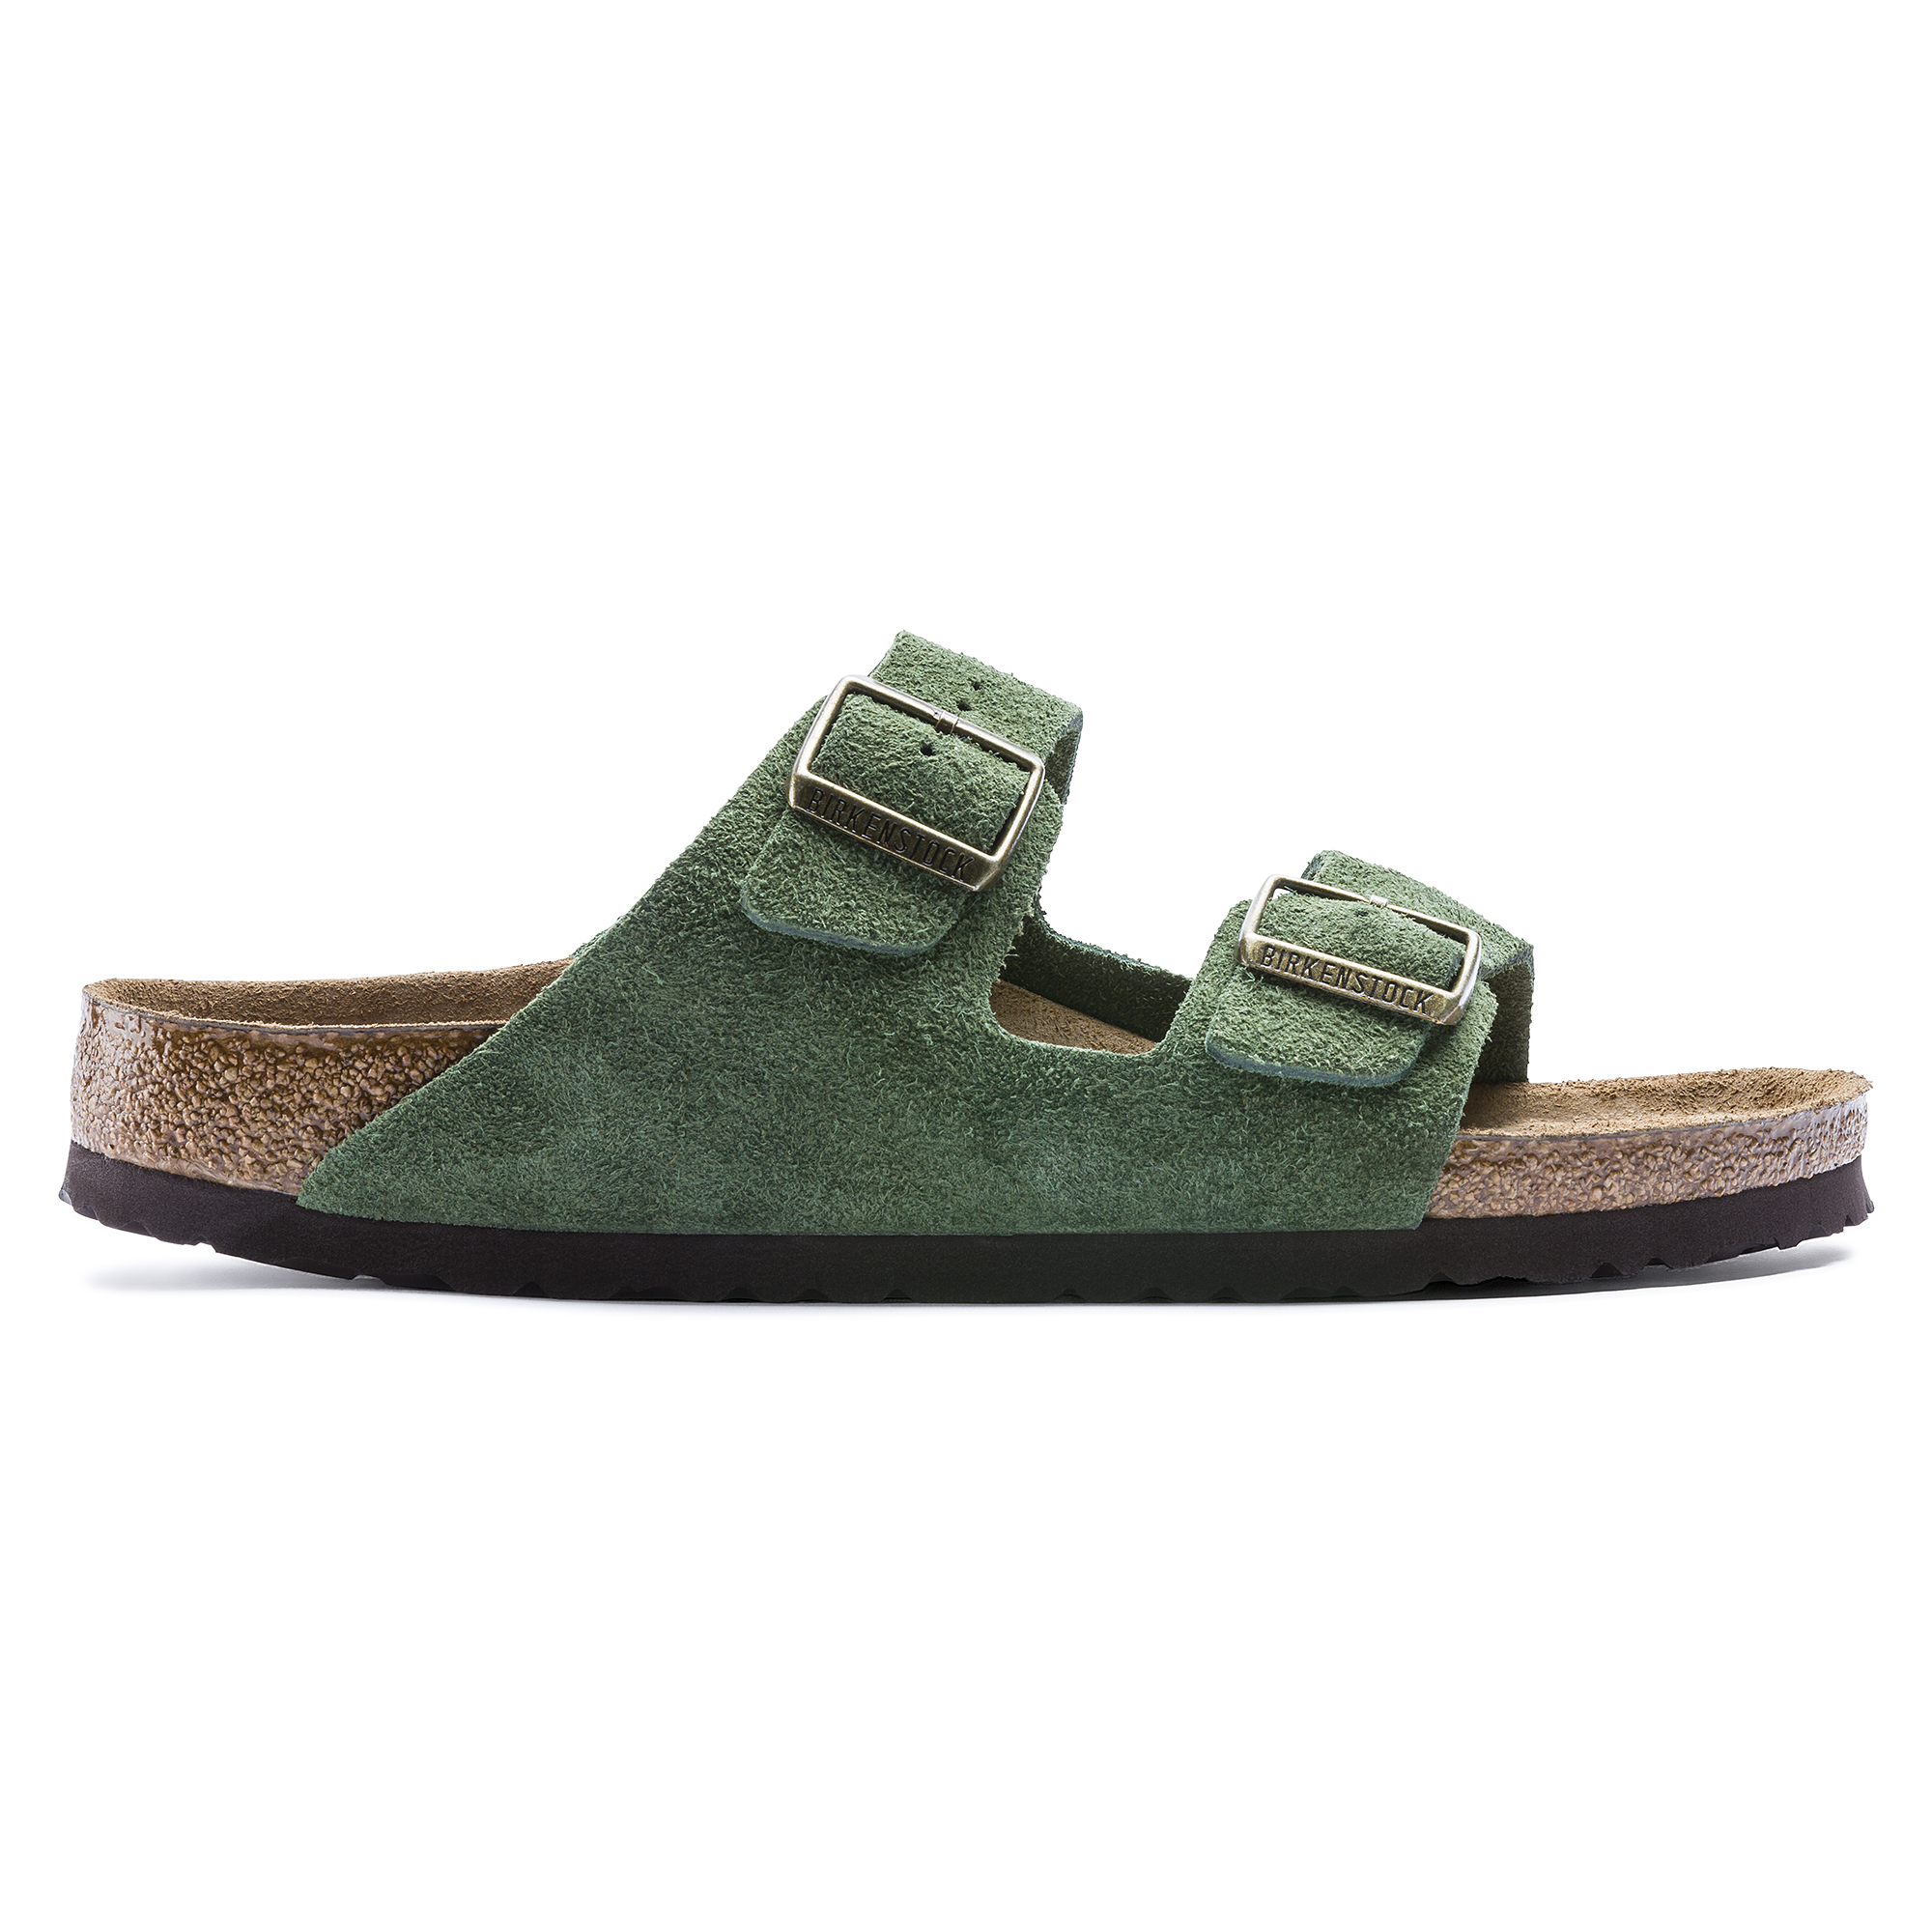 Birkenstock Arizona Shearling Sandal Suede Leather Green